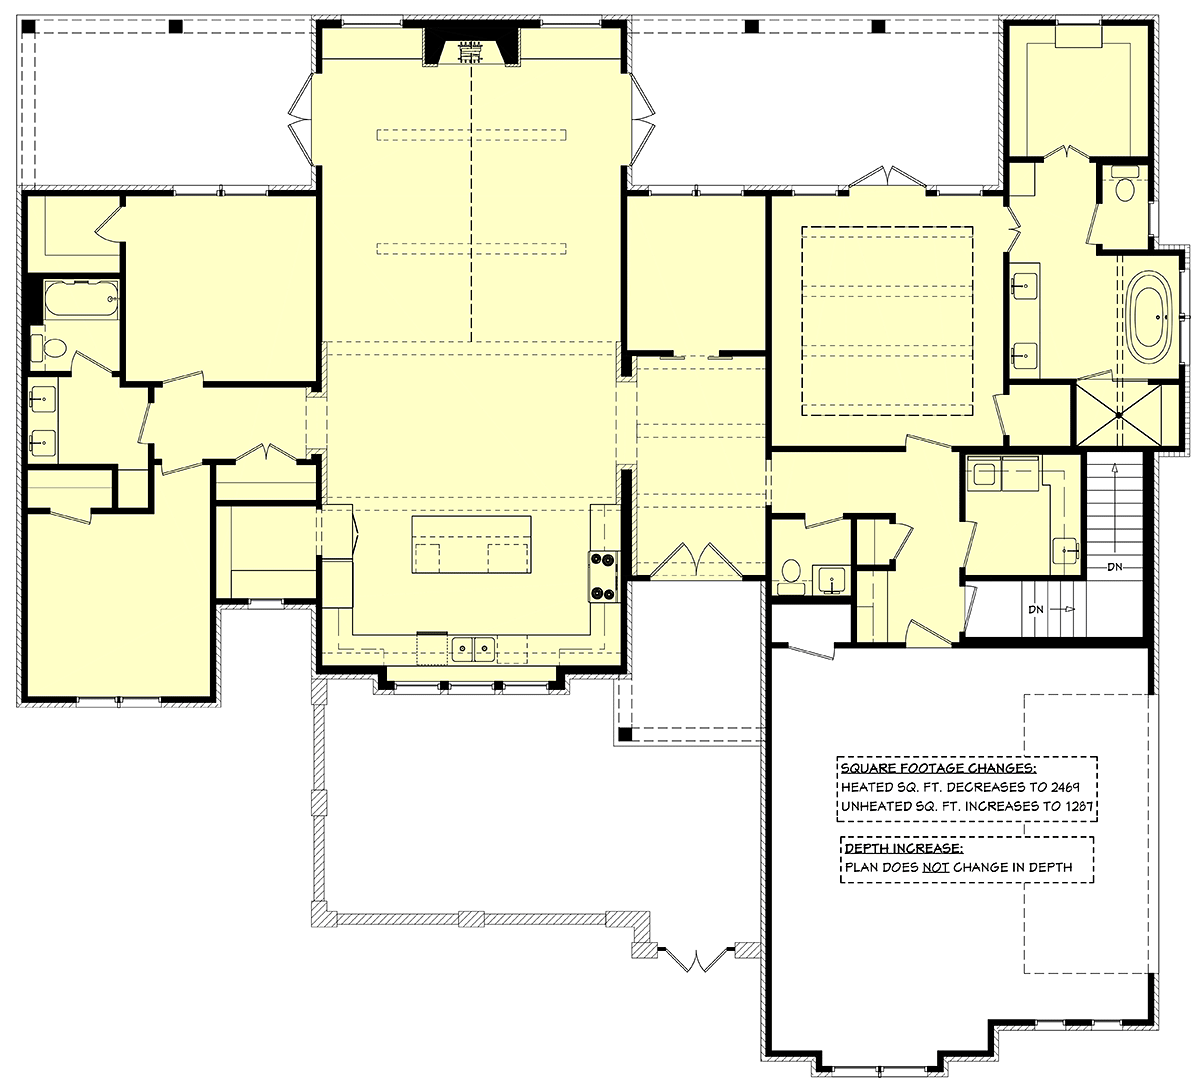 House Plan 80835 Alternate Level One